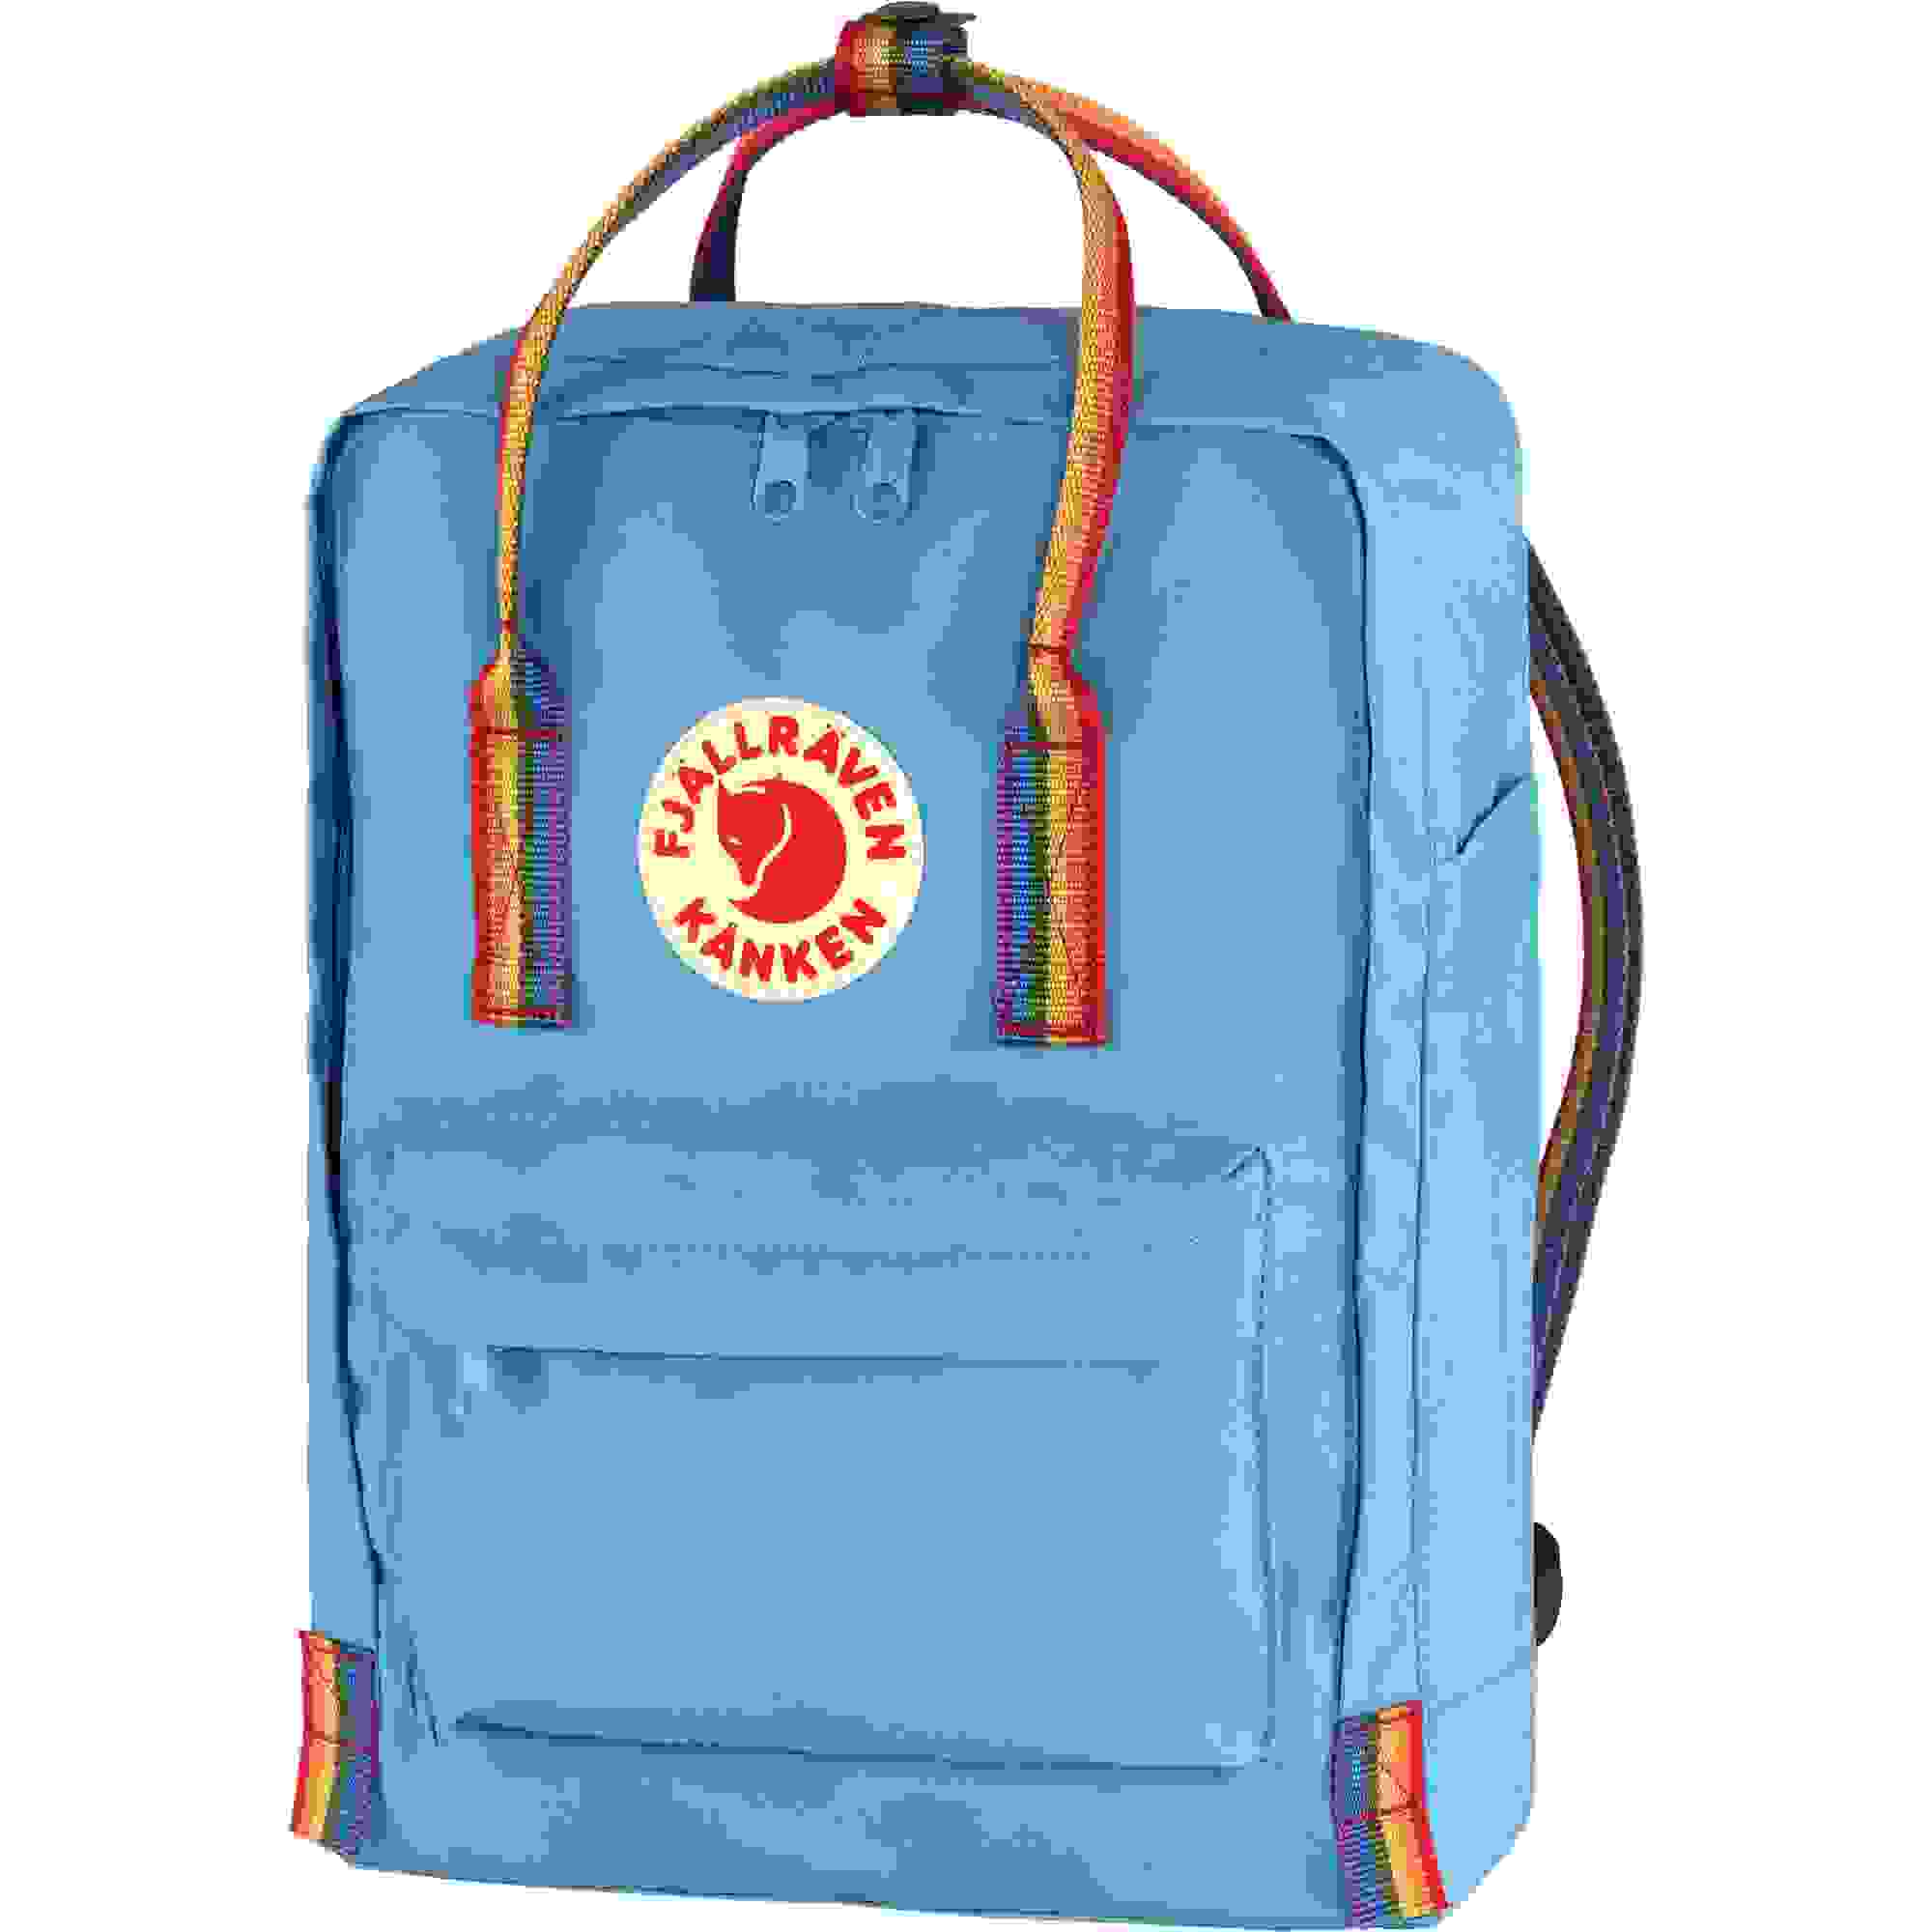 Backpack Teal BlueRainbow Color. Beach Bag